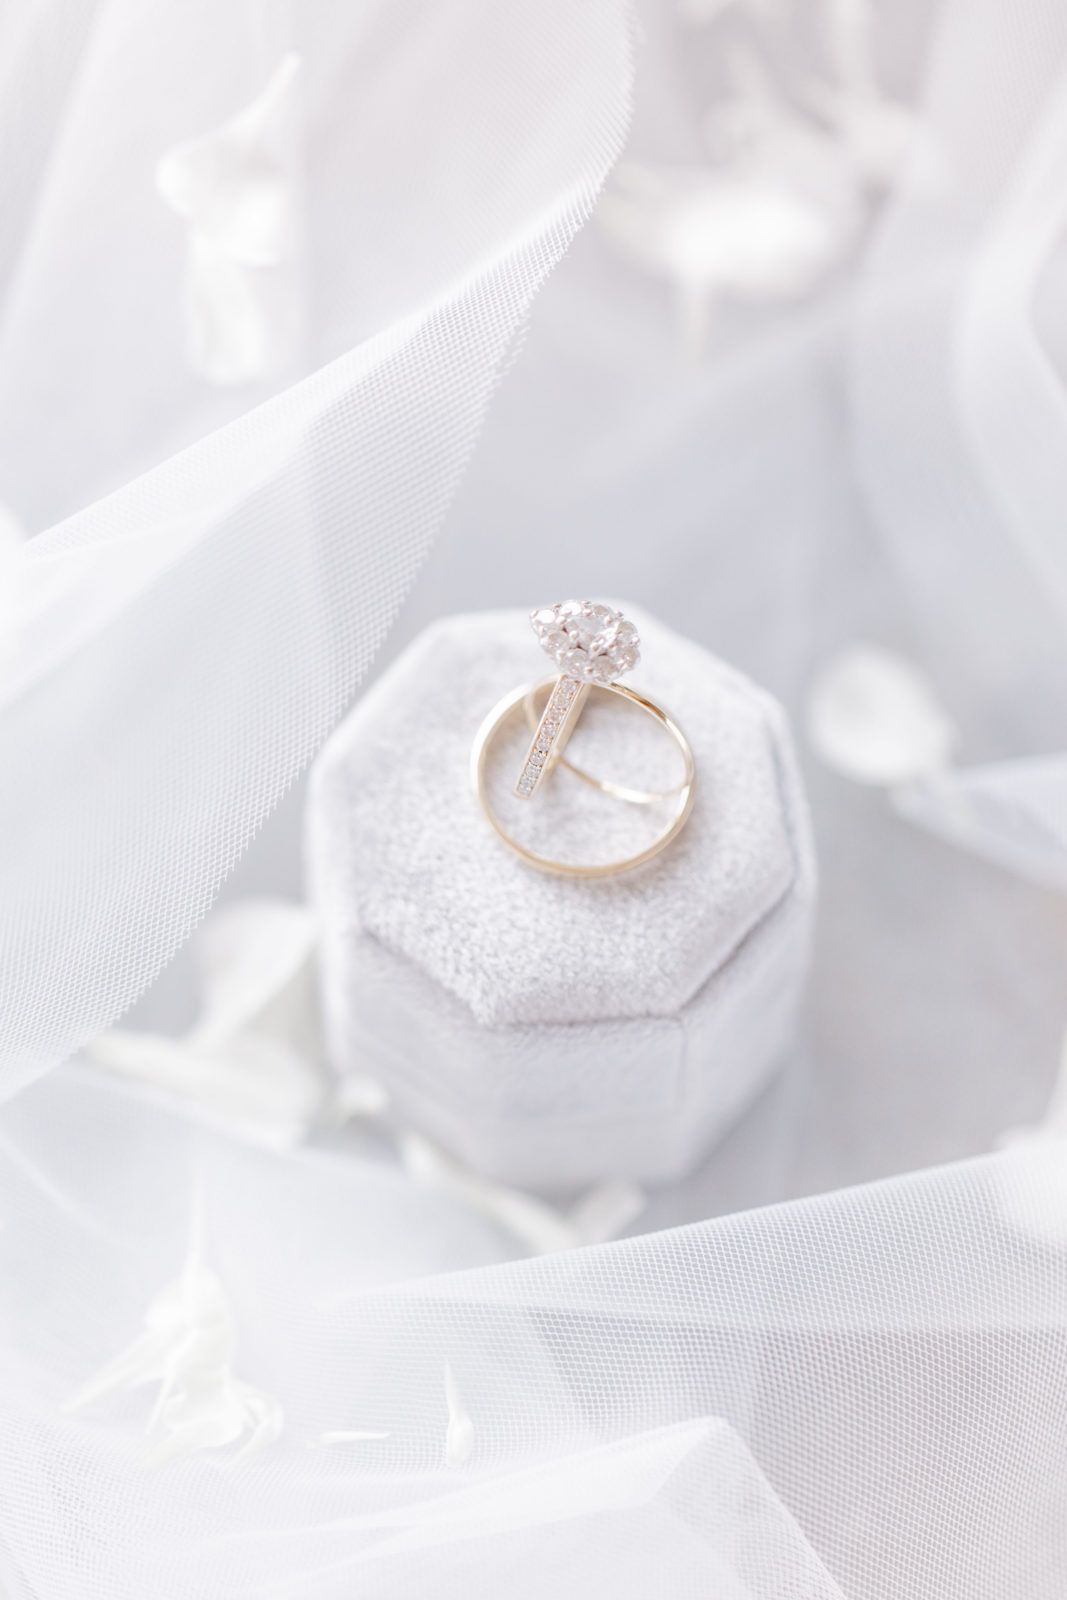 Wedding Details, rings, perfume